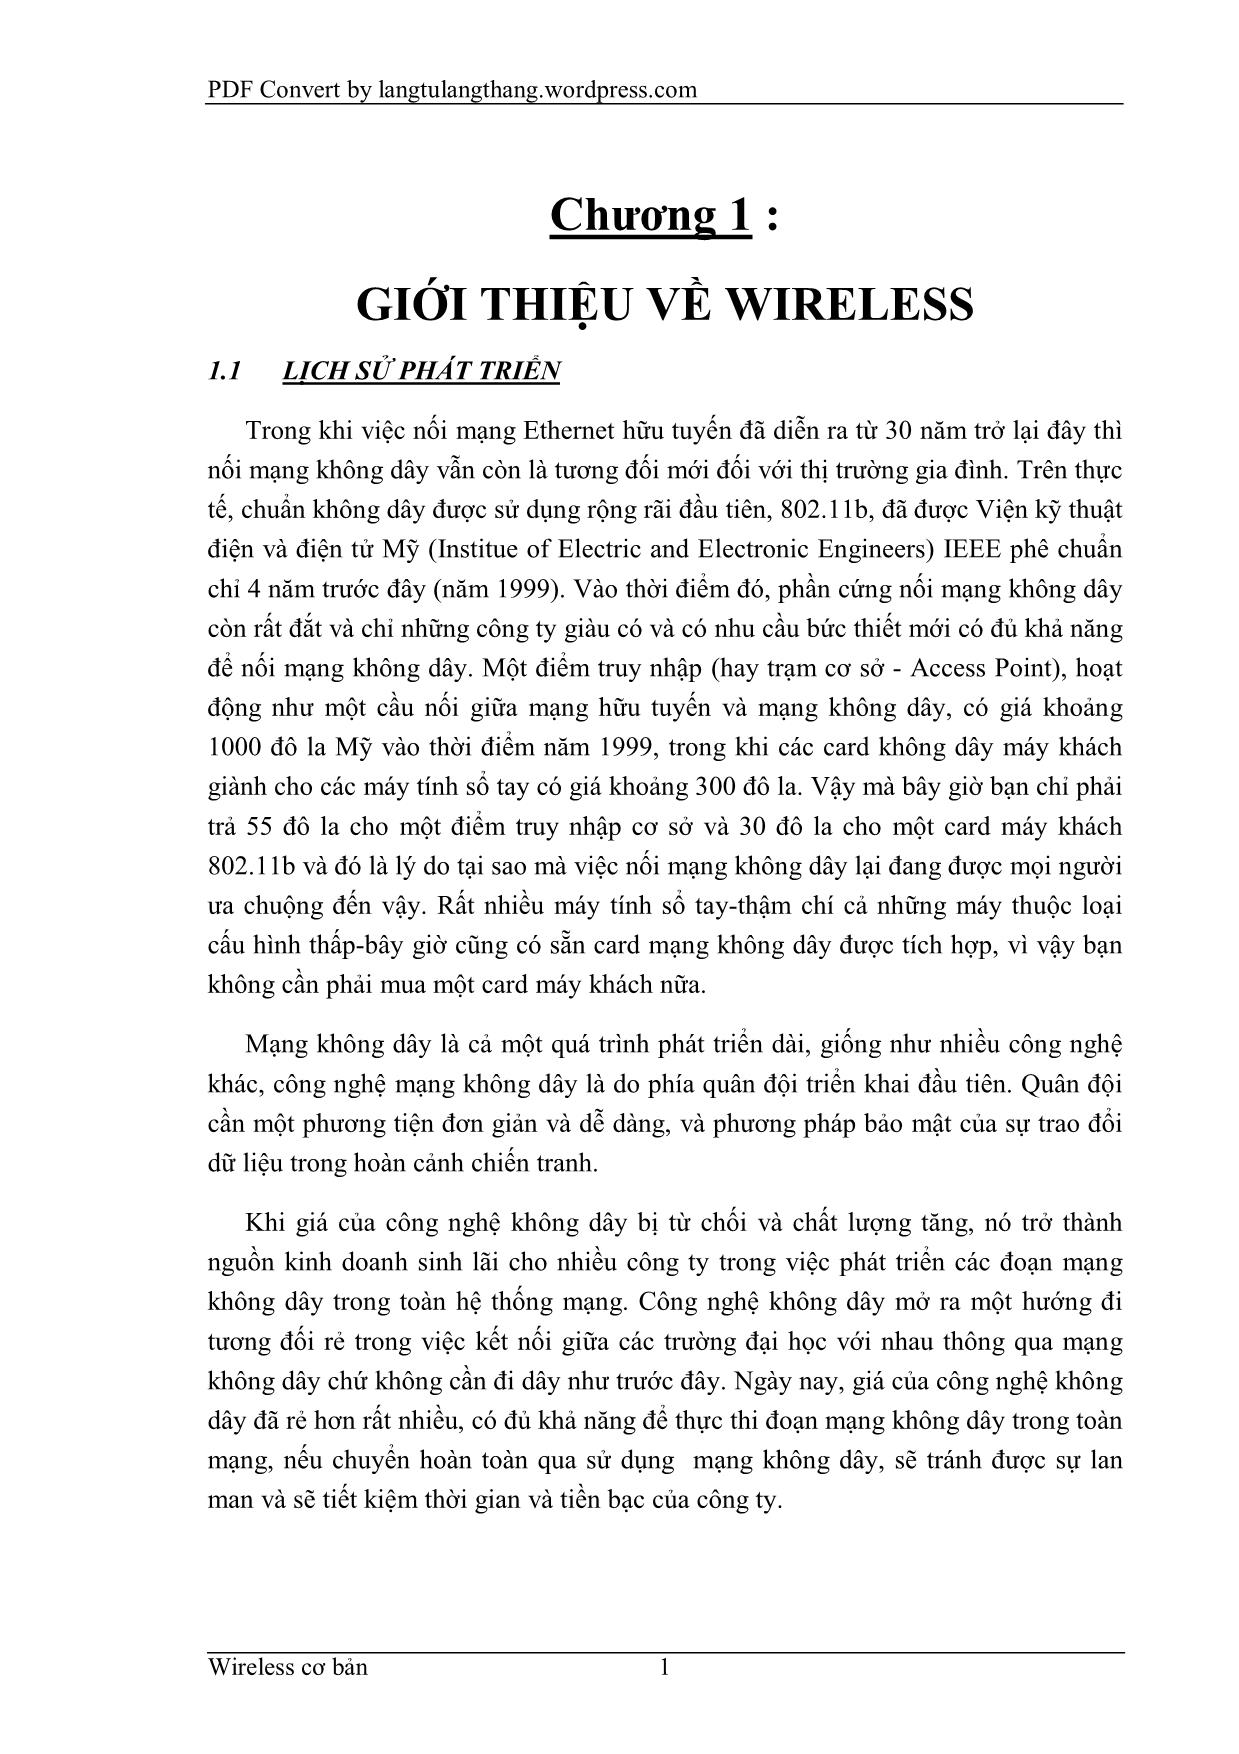 WIRELESS trang 1